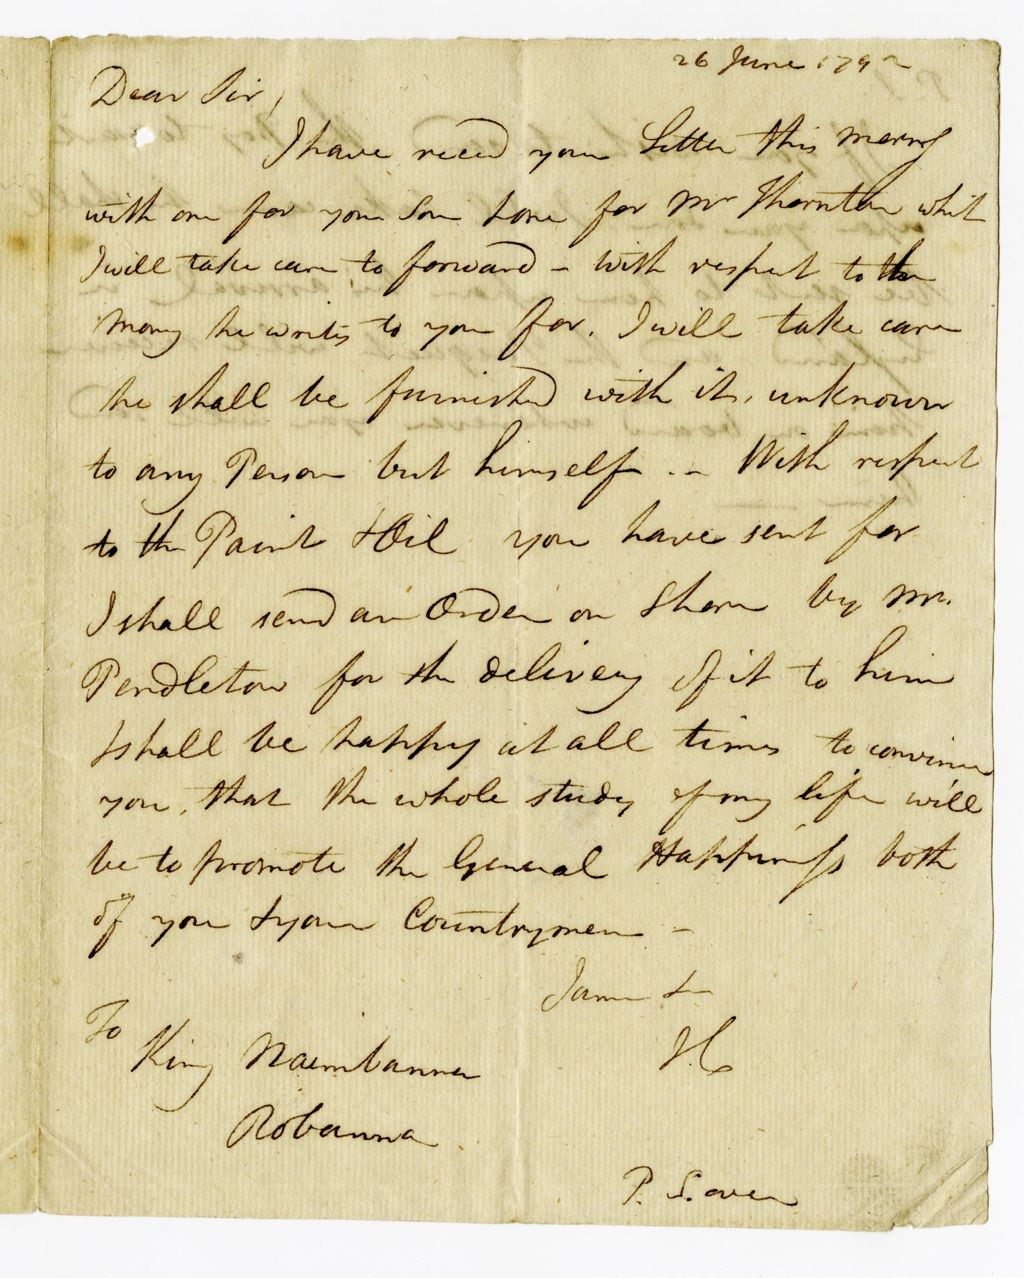 Miniature of Letter from JC (John Clarkson?) to King Naimbanna